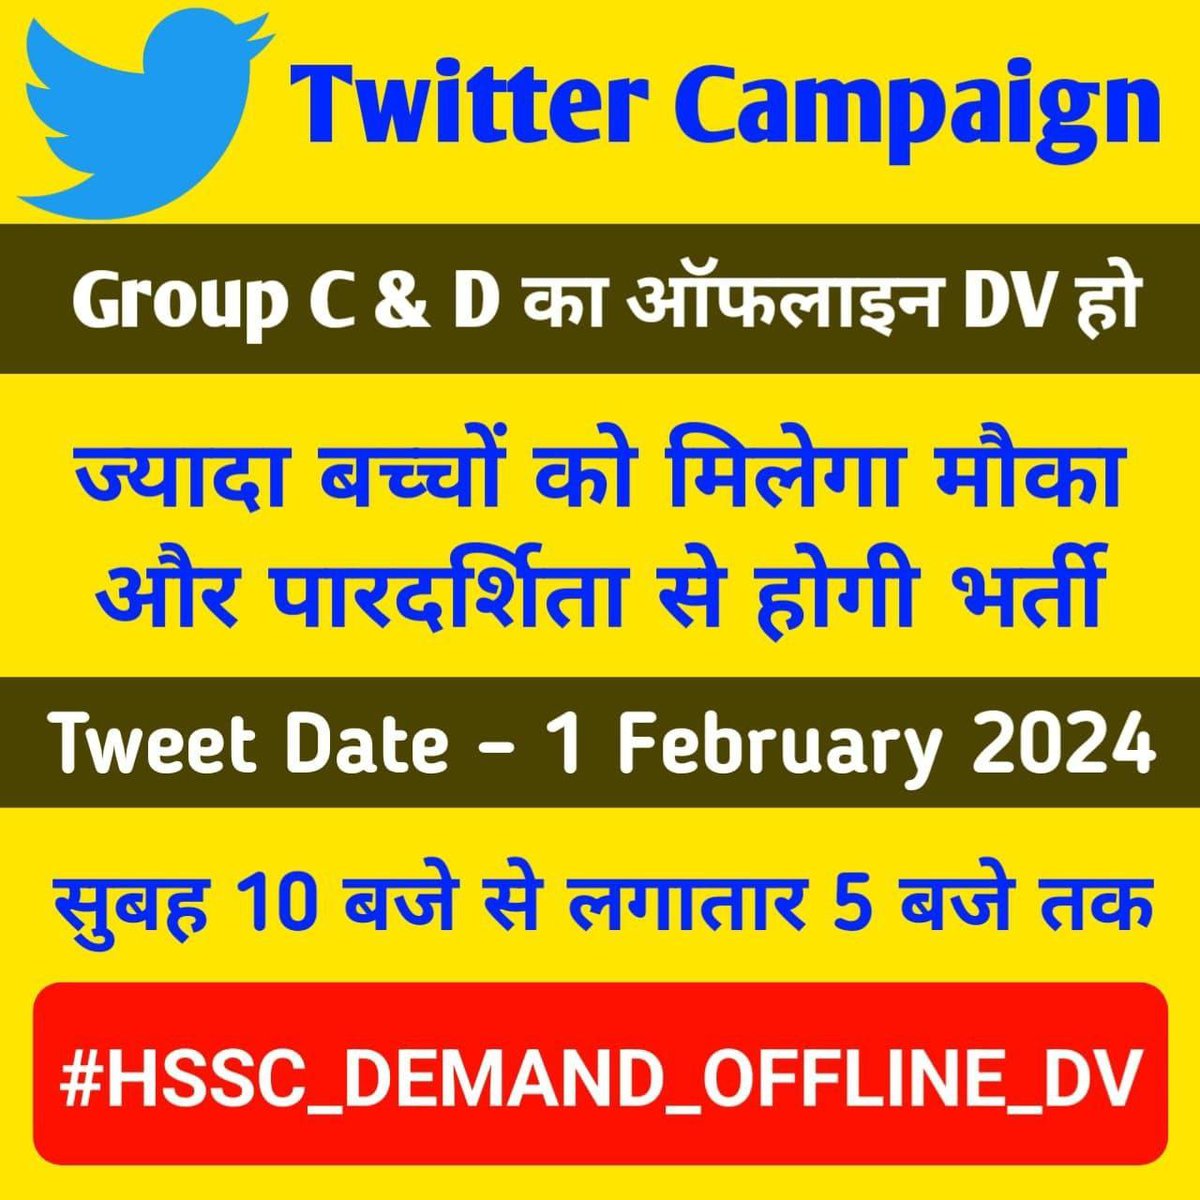 #HSSC_DEMAND_OFFLINE_DV
#HSSC_DEMAND_OFFLINE_DV
@cmohry 
@mlkhattar 
@Dchautala